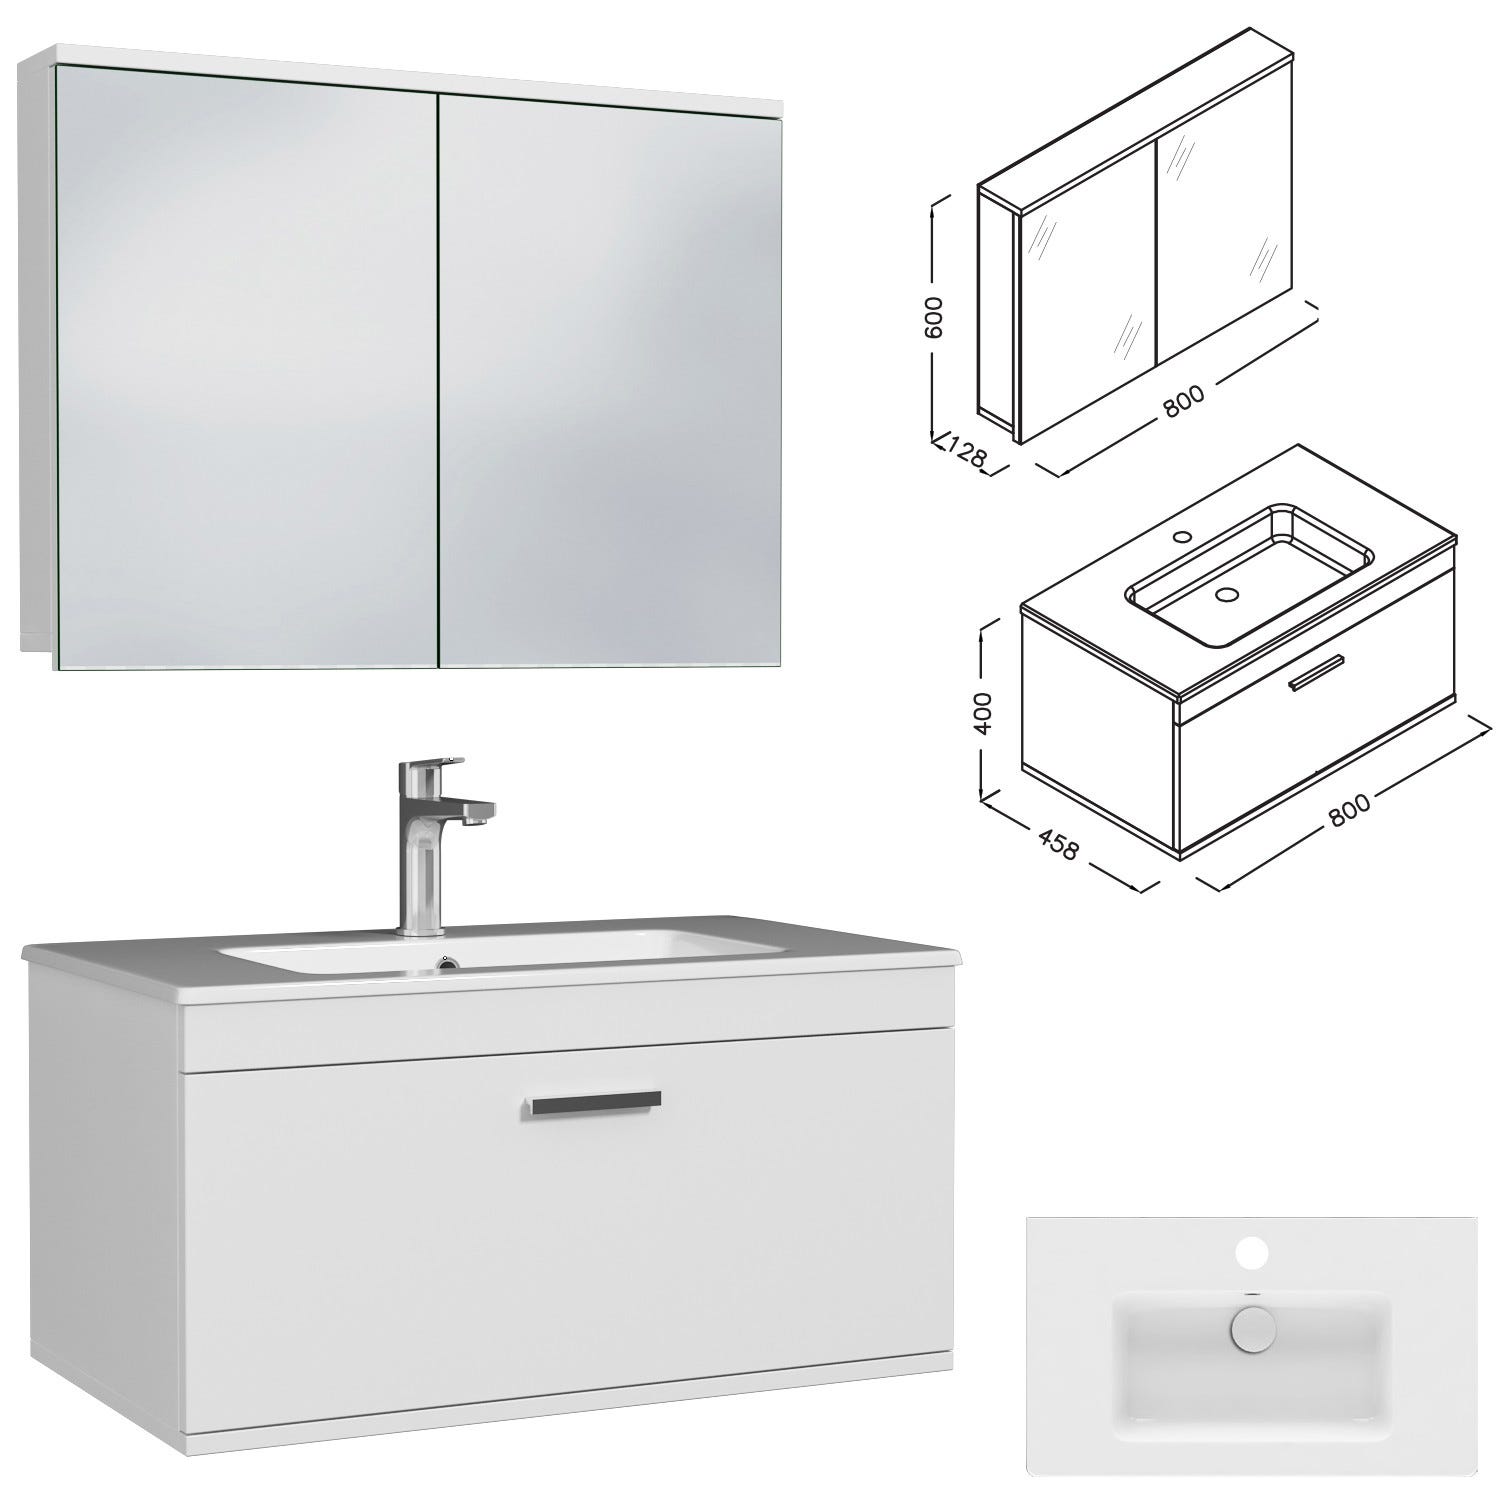 RUBITE Meuble salle de bain simple vasque 1 tiroir blanc largeur 80 cm + miroir armoire 2